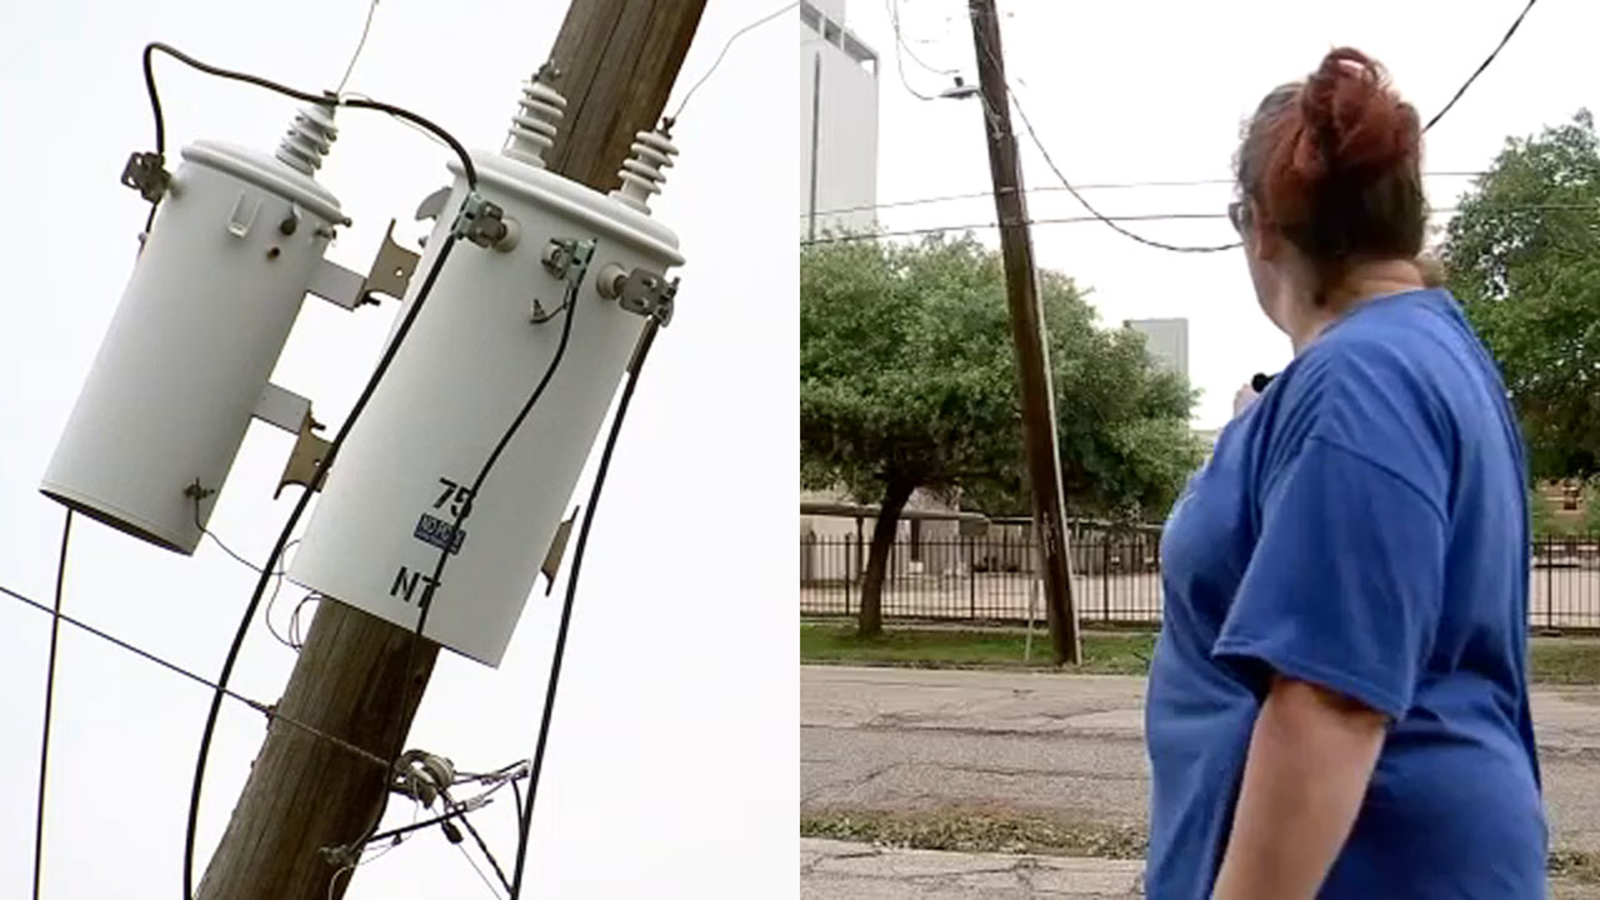 Houston storm damage: Midtown drivers still traveling under leaning power pole despite CenterPoint Energy alerted to hazard [Video]